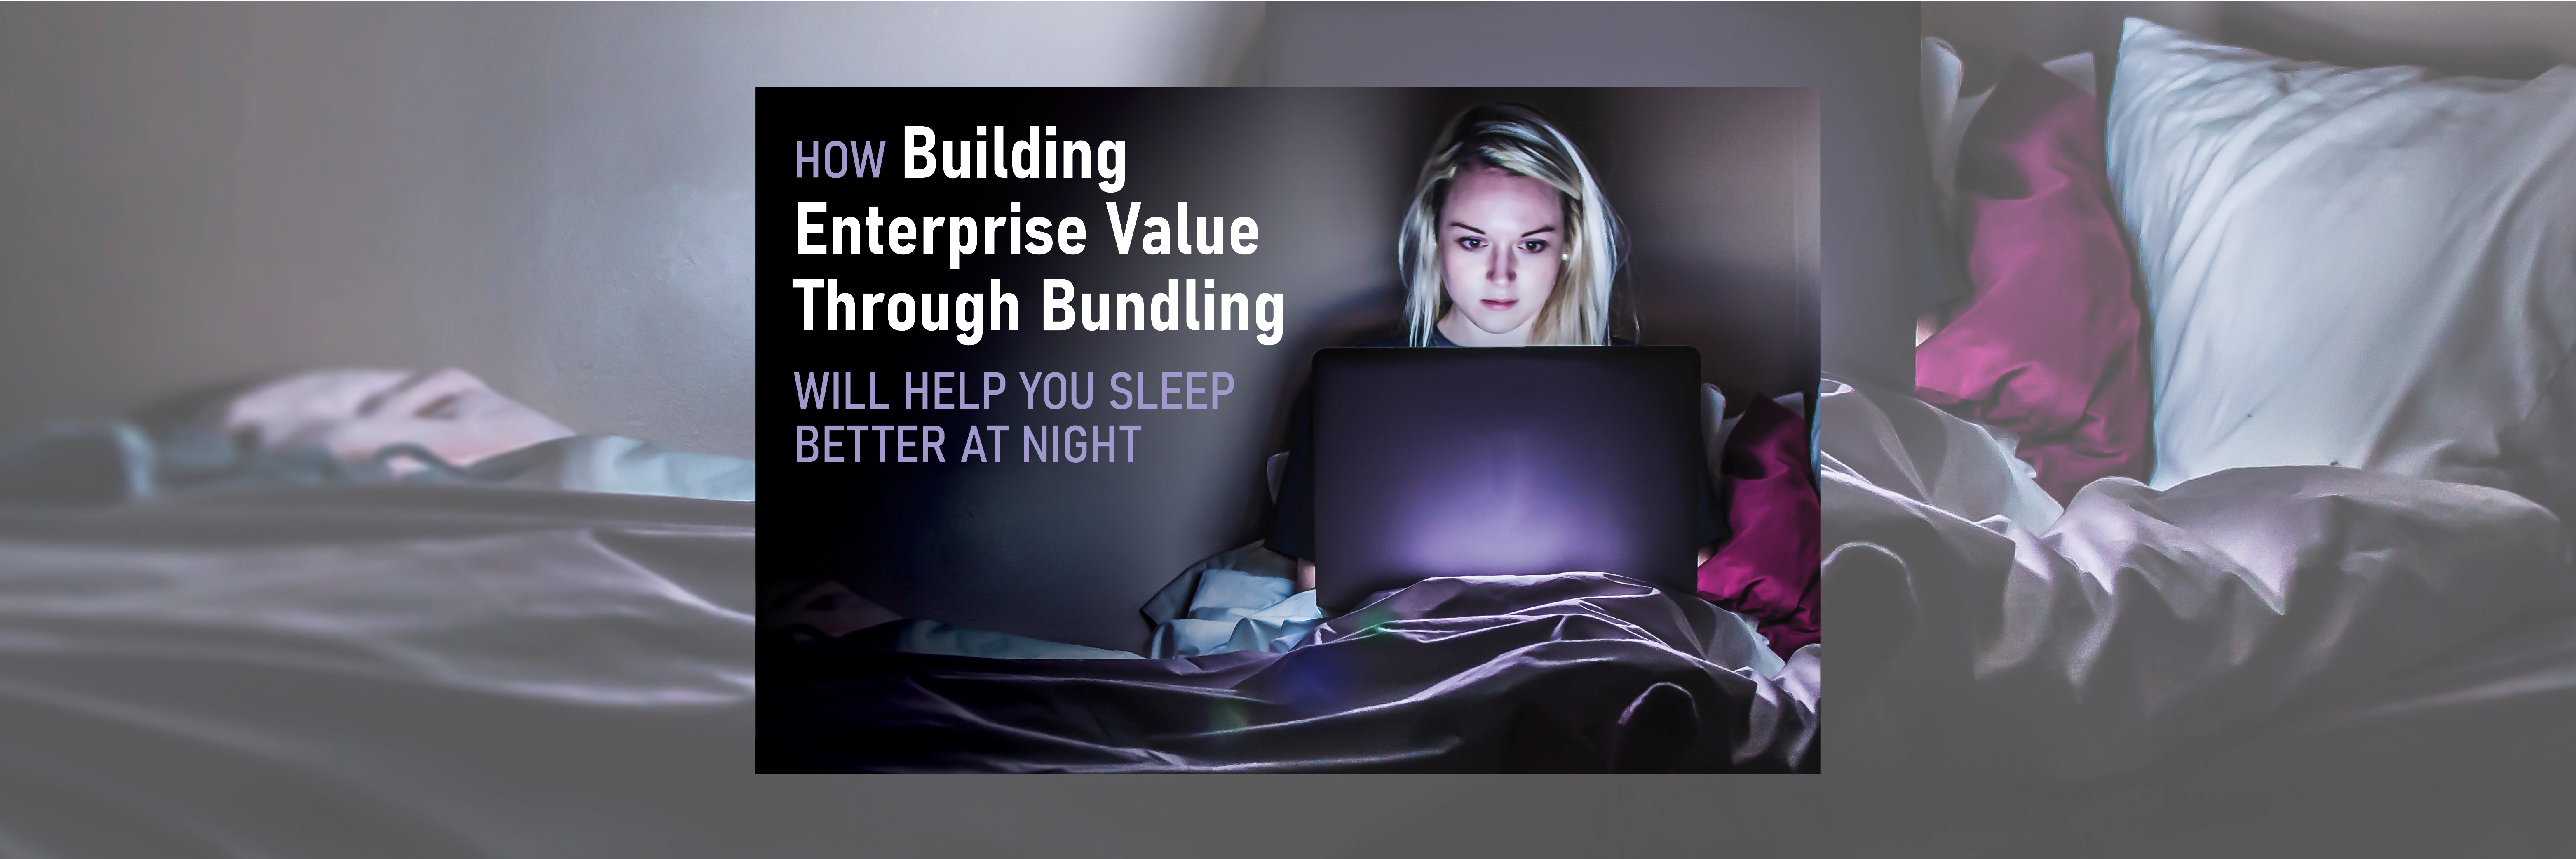 How Building Enterprise Value Through Bundling Will Help You Sleep Better at Night